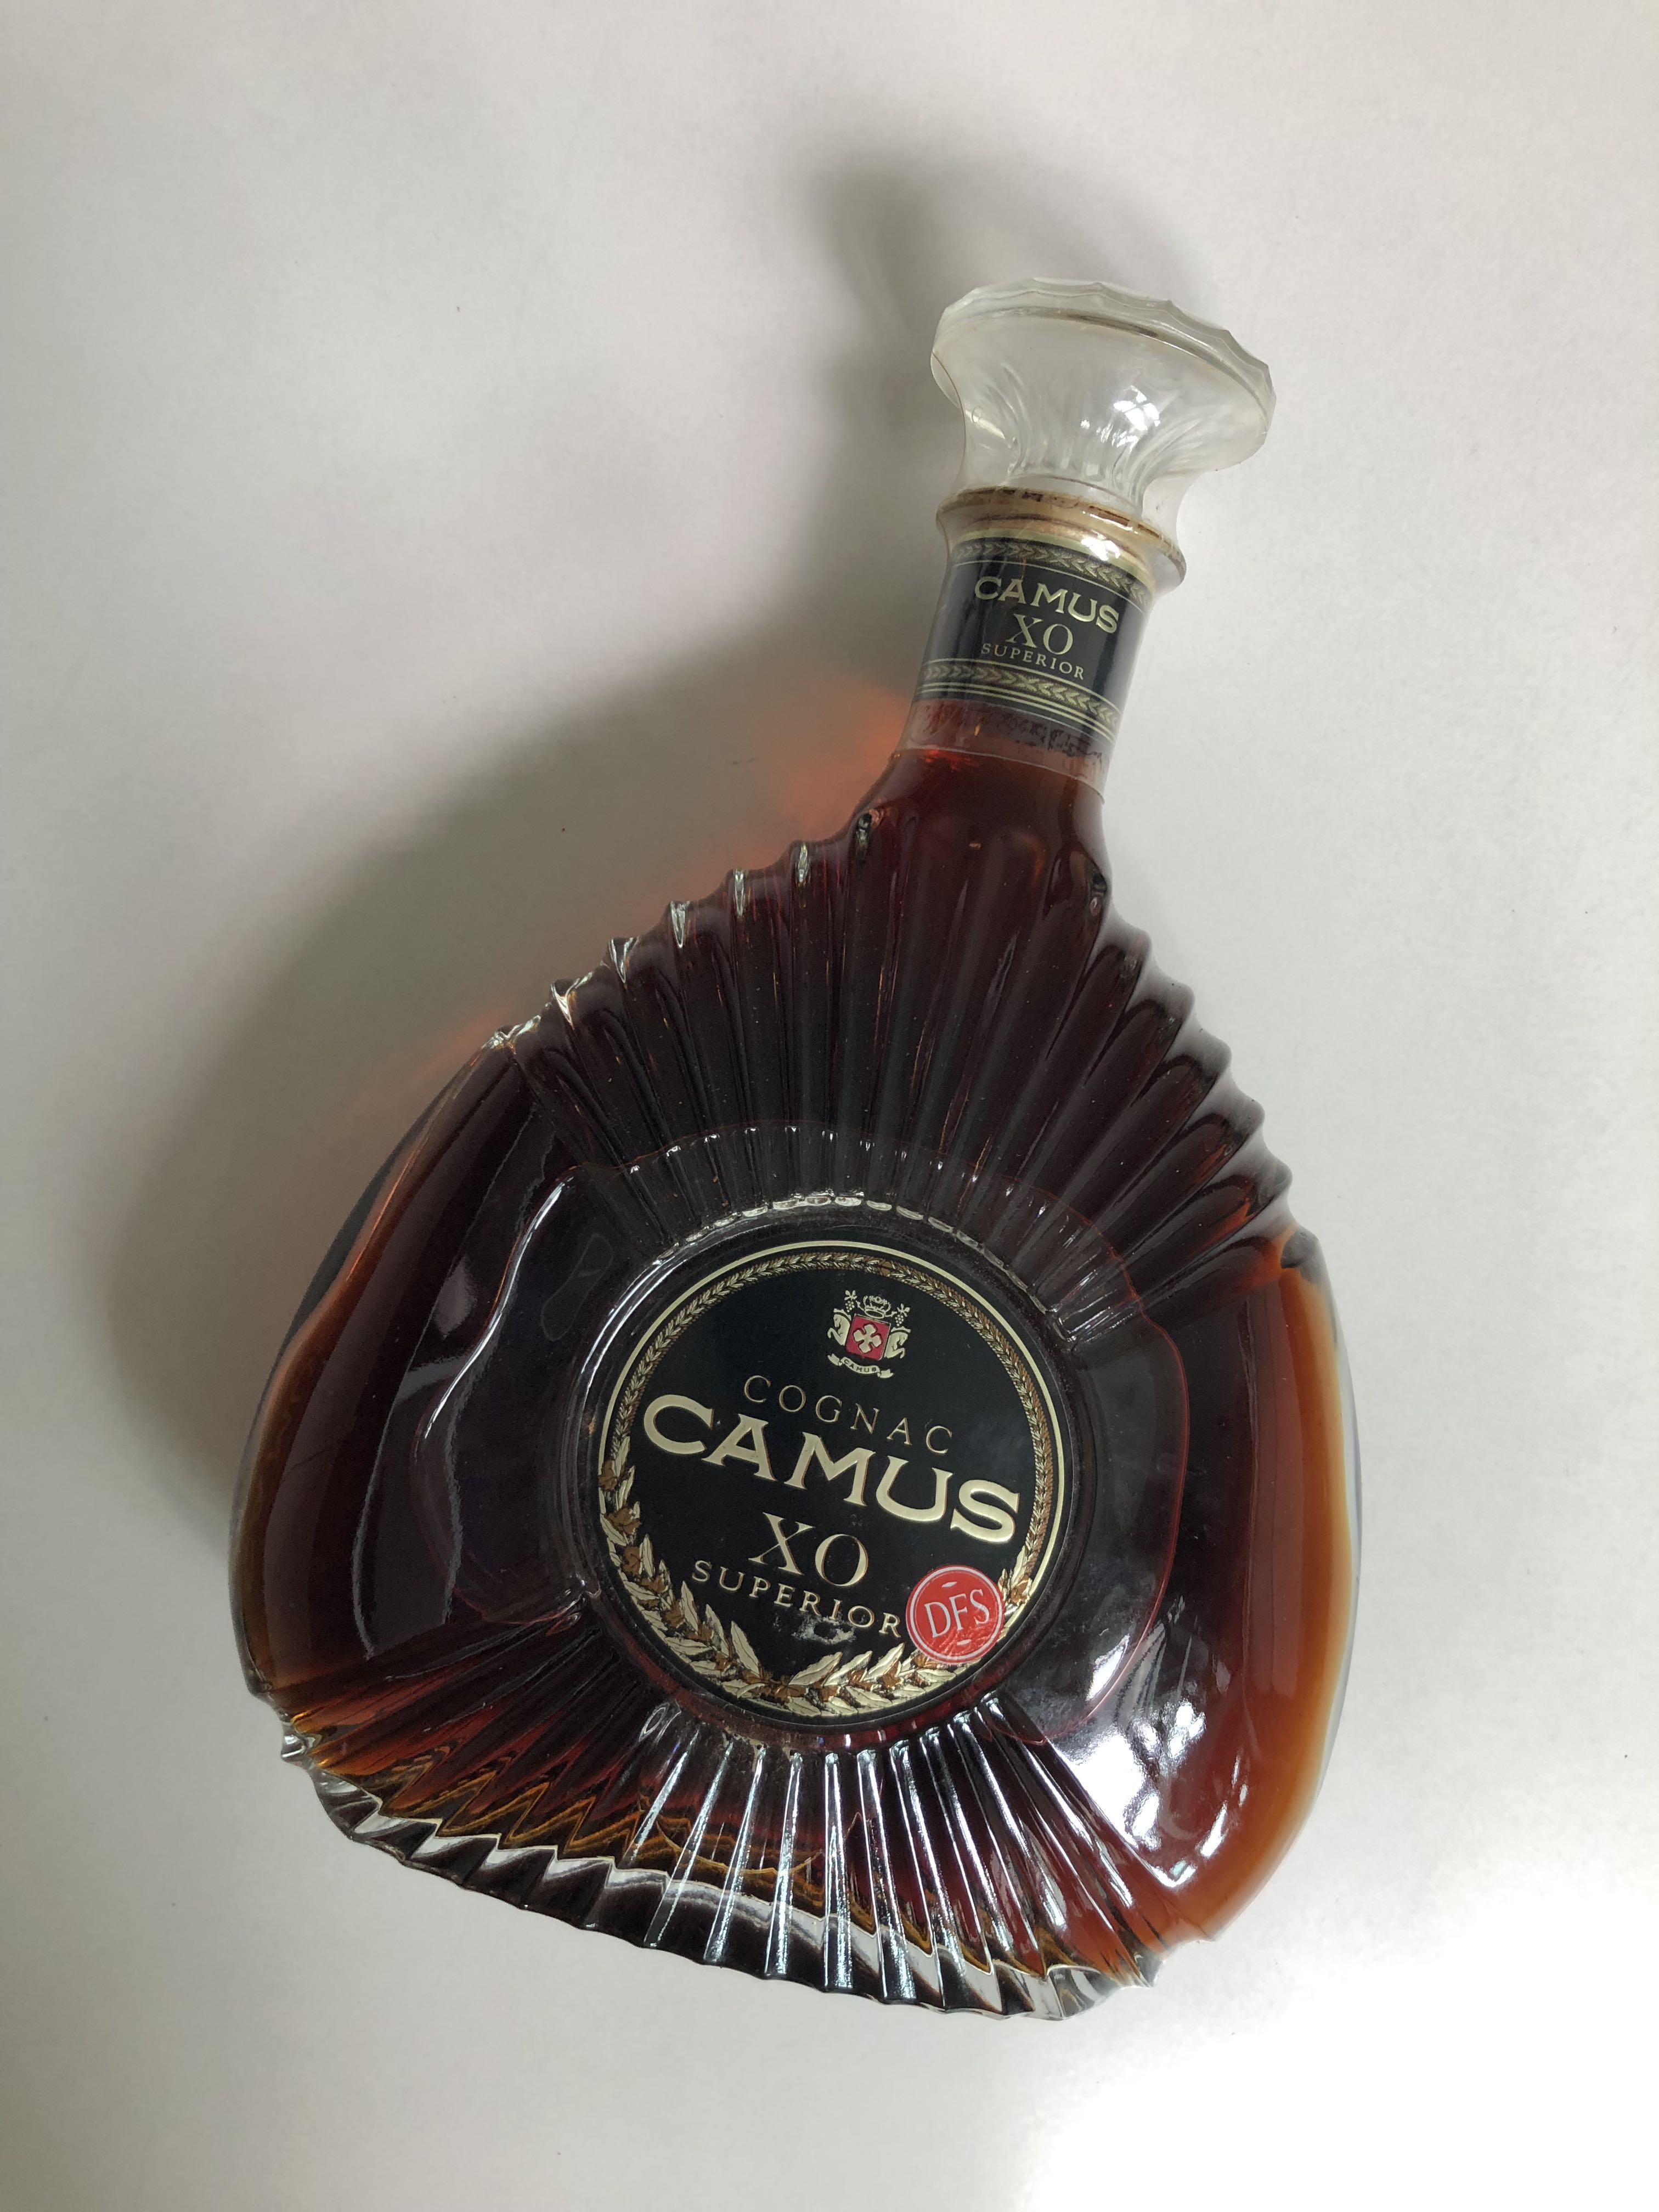 Vintage Cognac Camus XO superior - sealed bottle (new), Food 